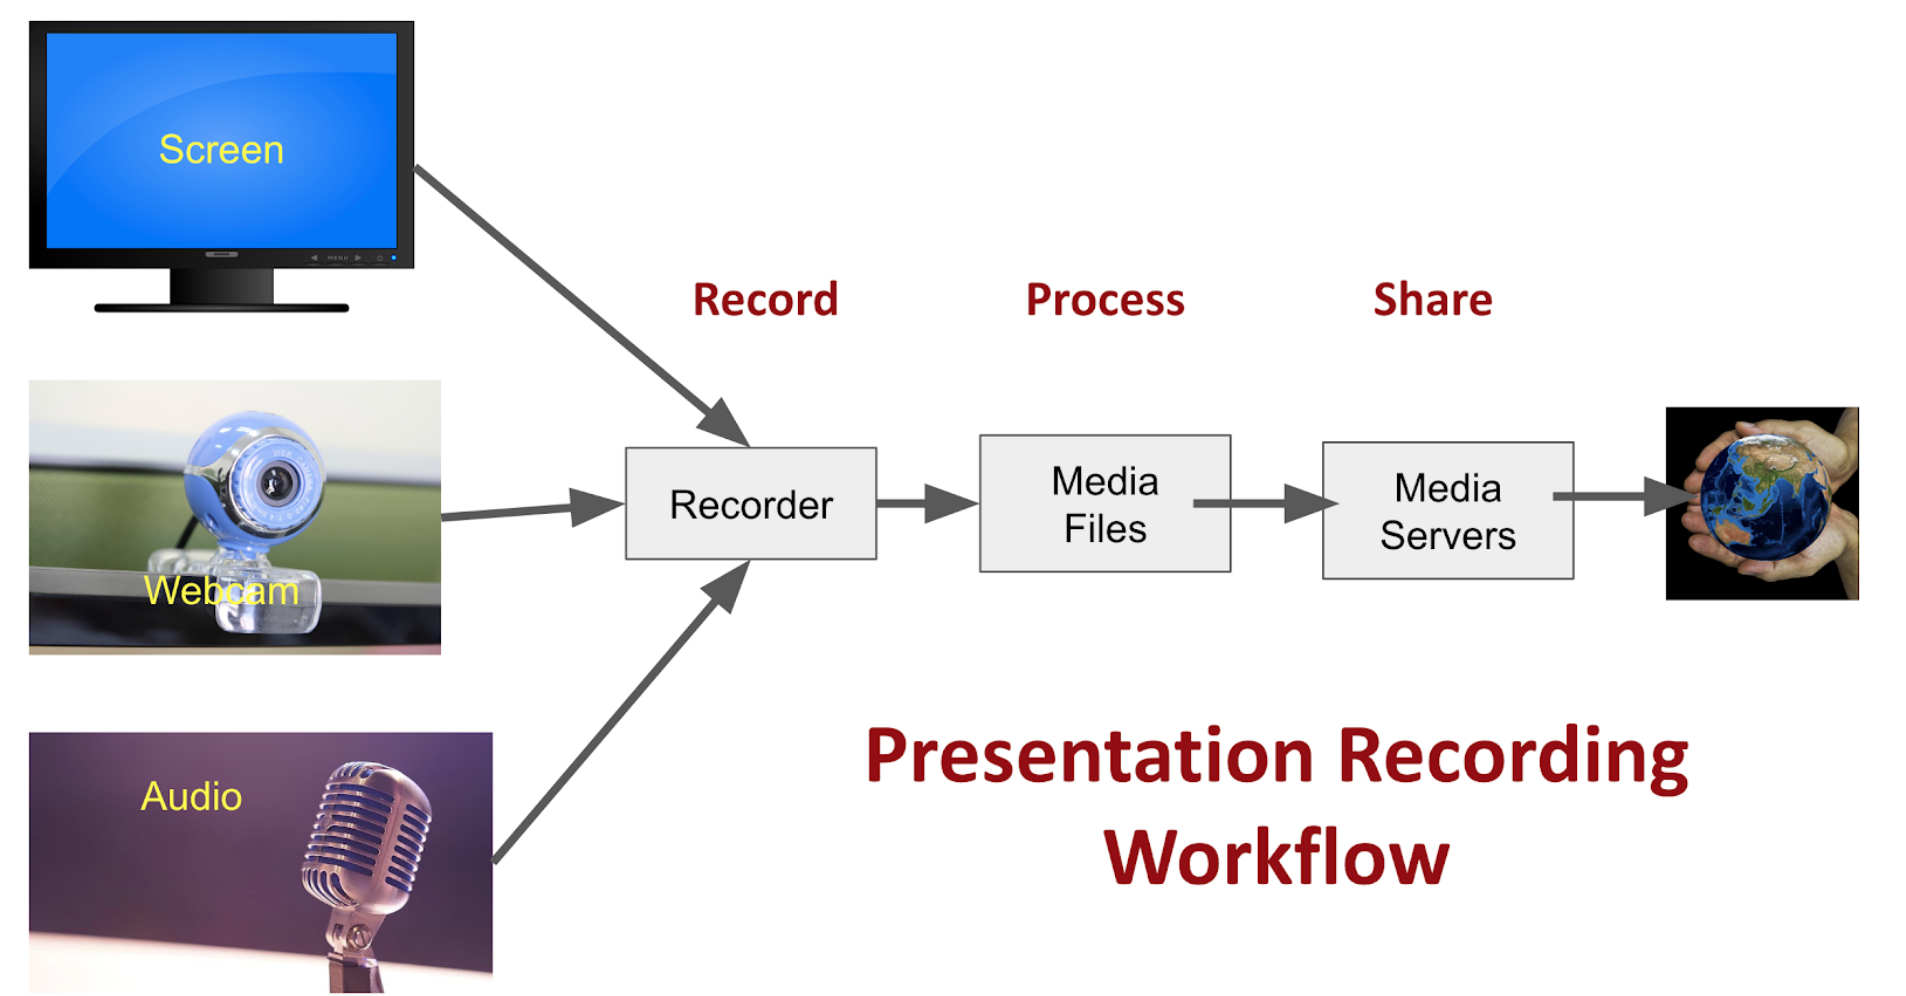 Presentation recording workflow diagram